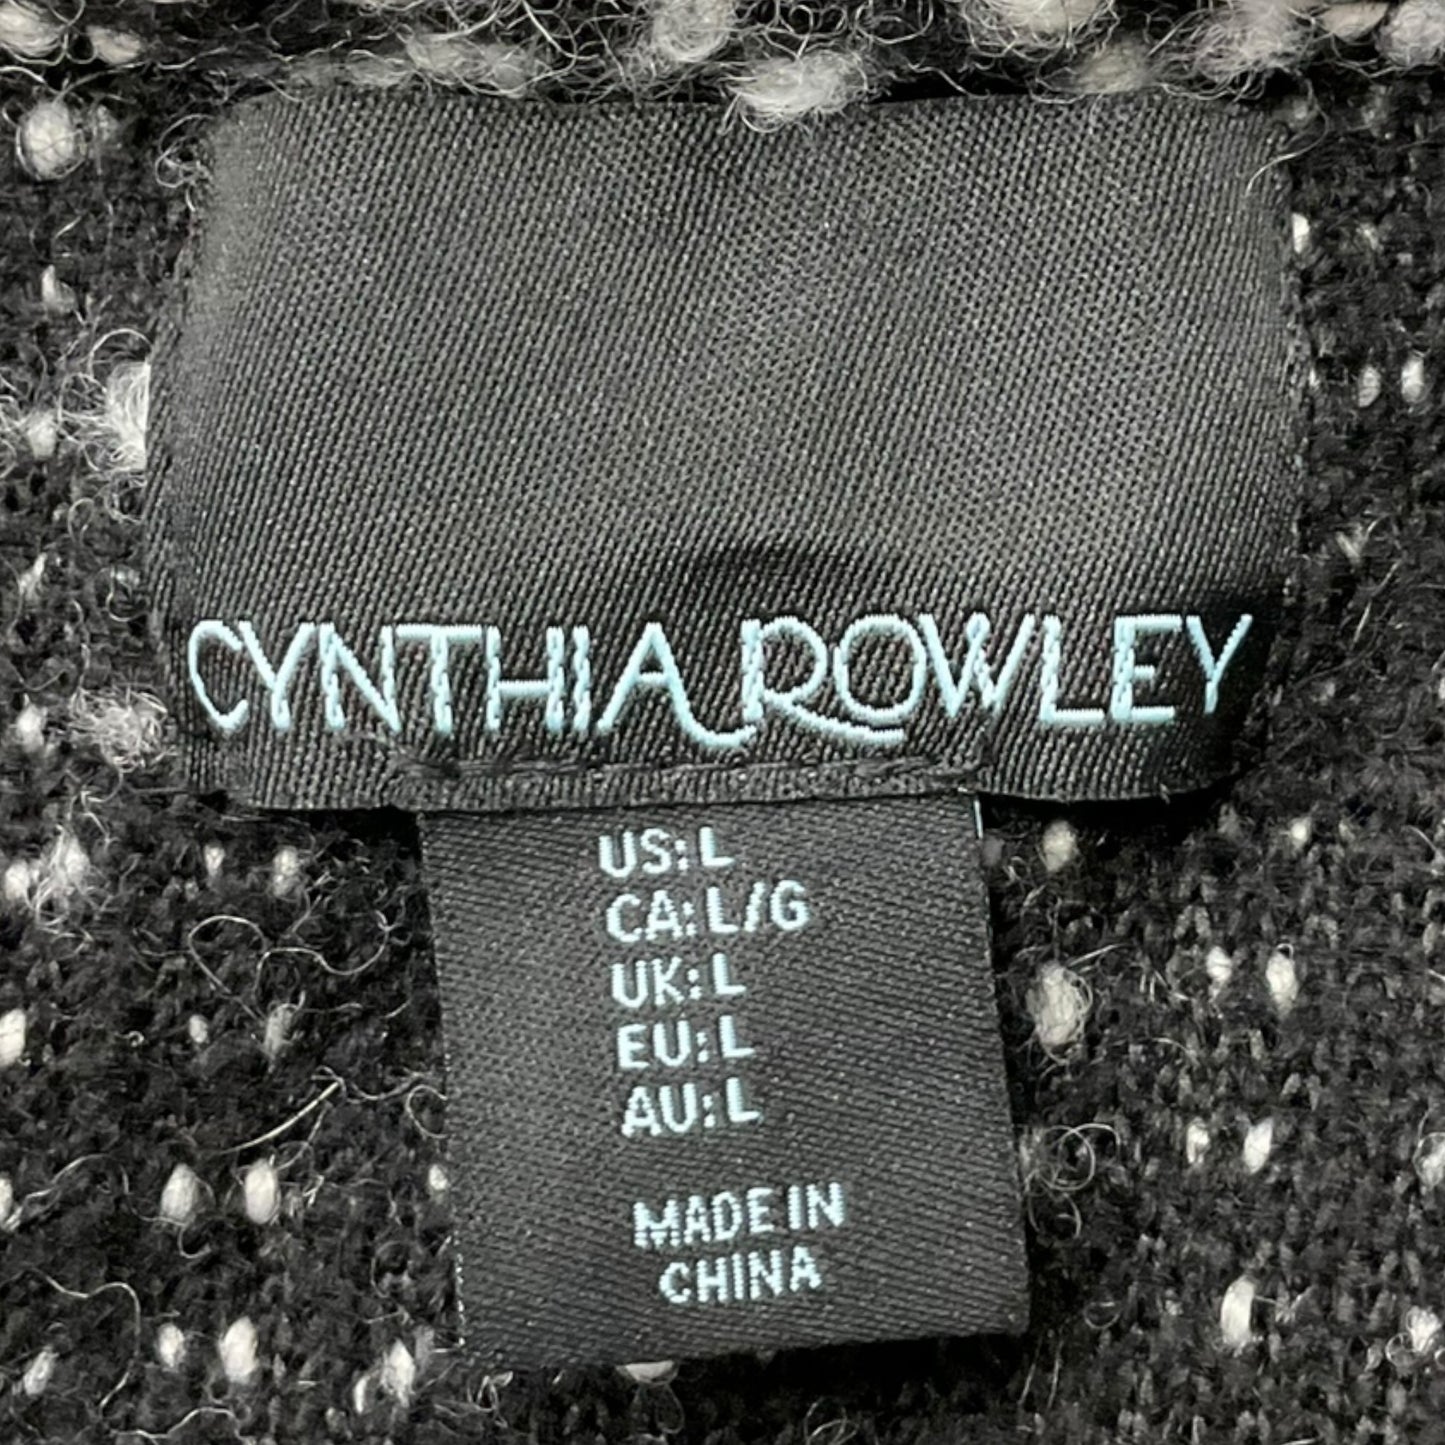 Coat Wool By Cynthia Rowley  Size: L